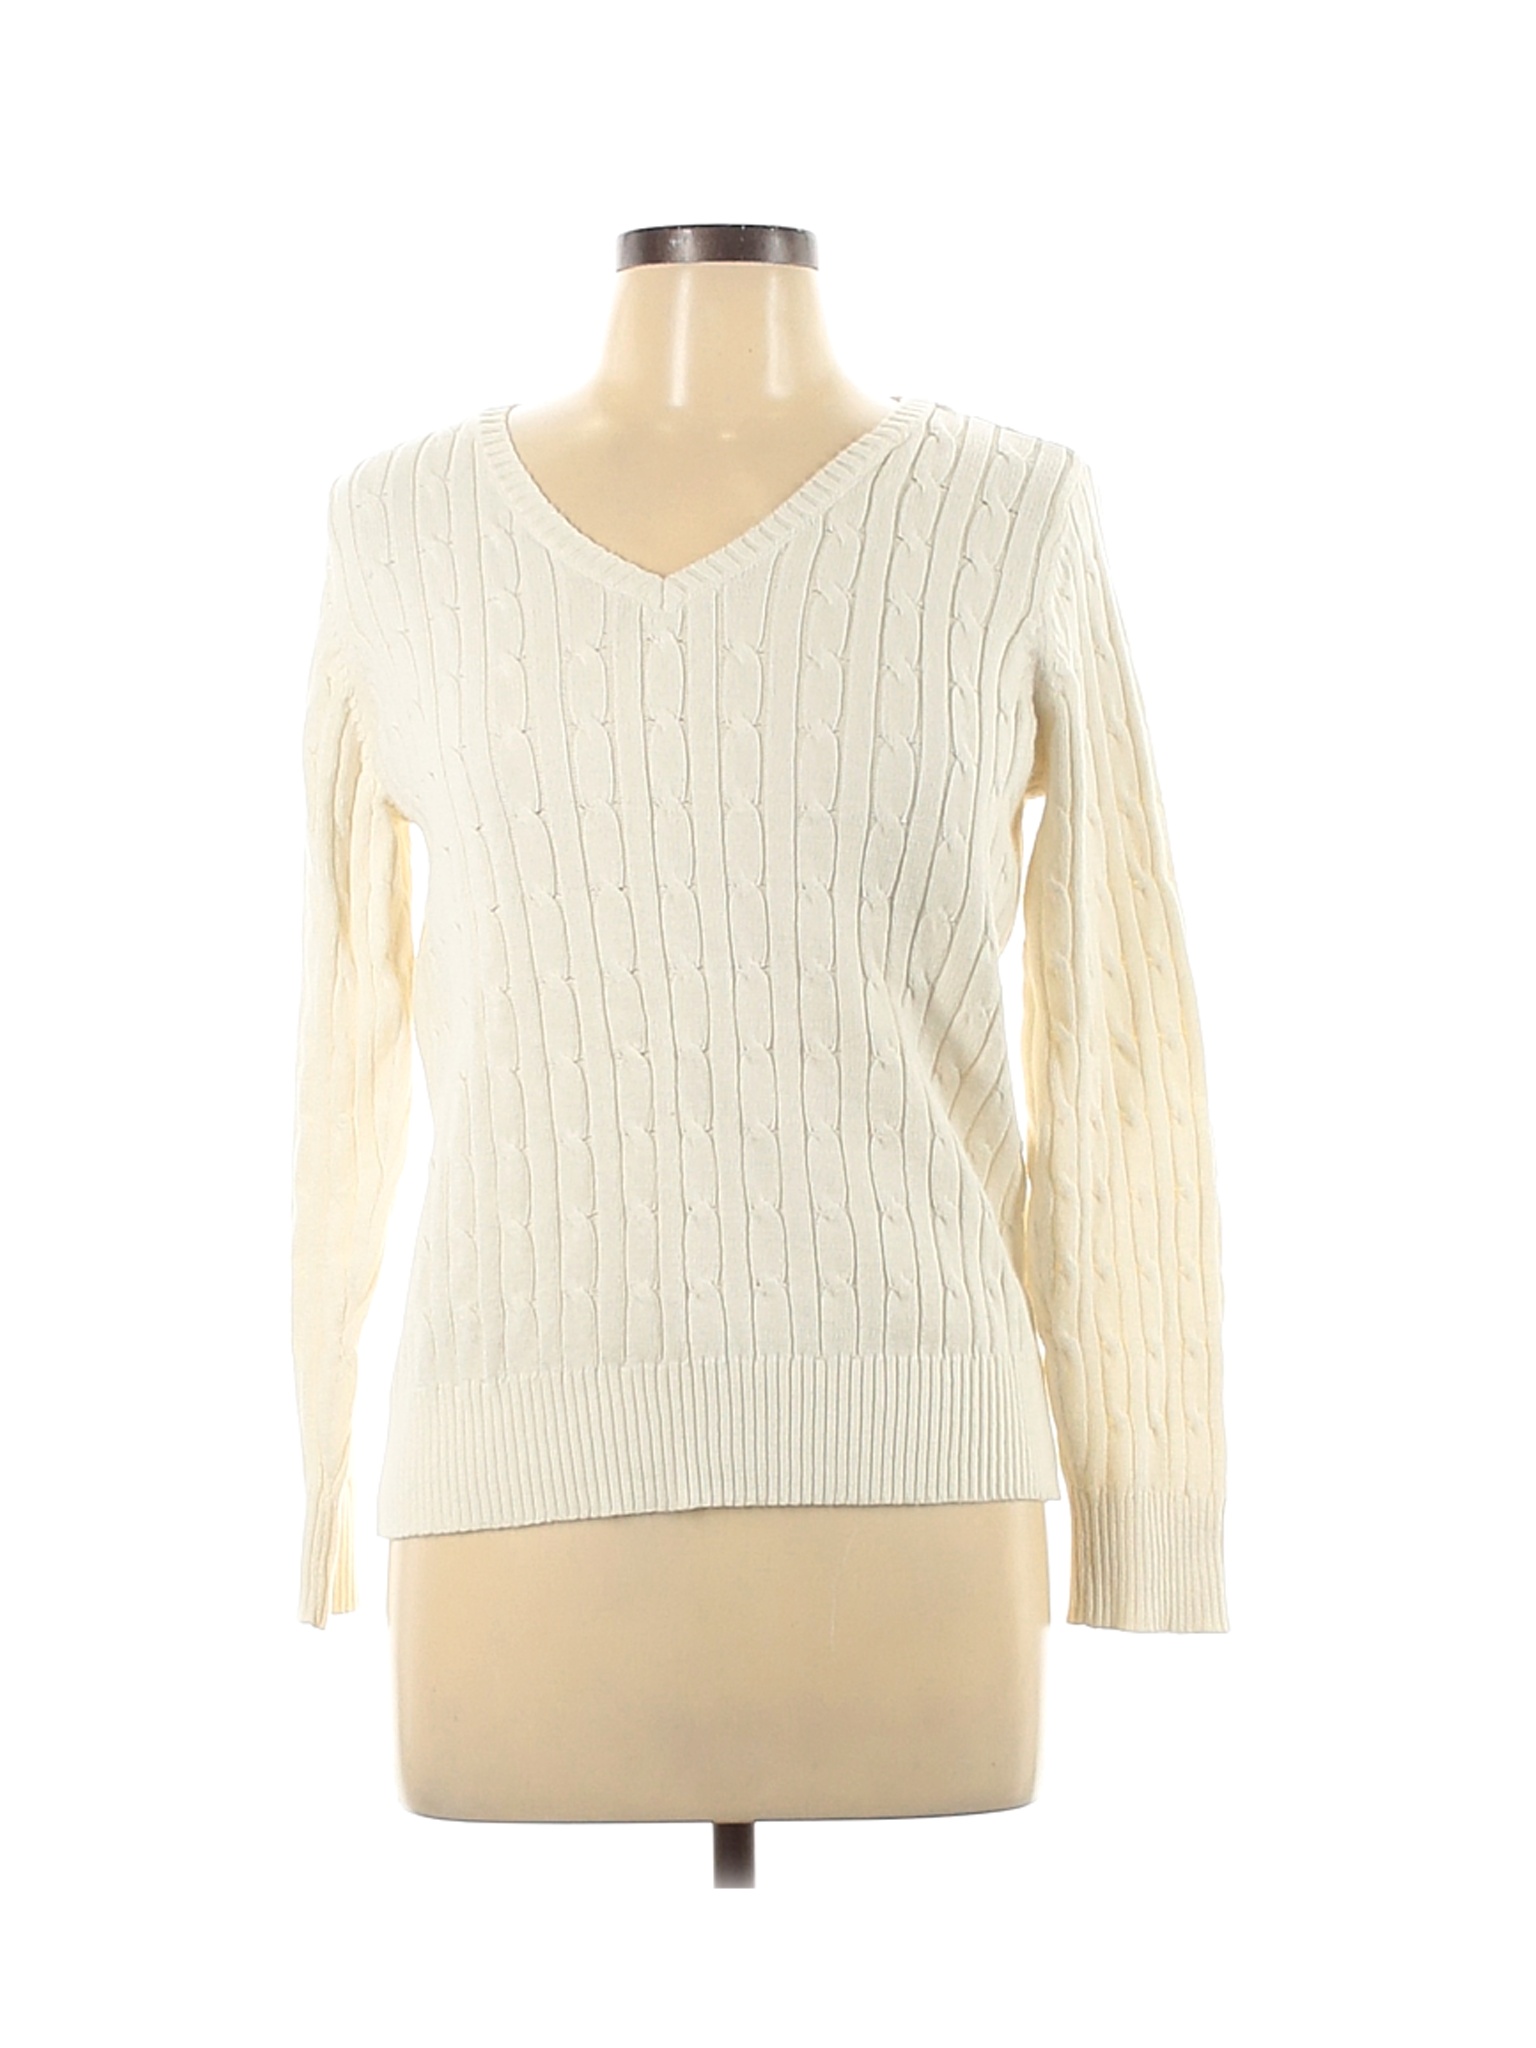 St. John's Bay Women Ivory Pullover Sweater L Petites | eBay